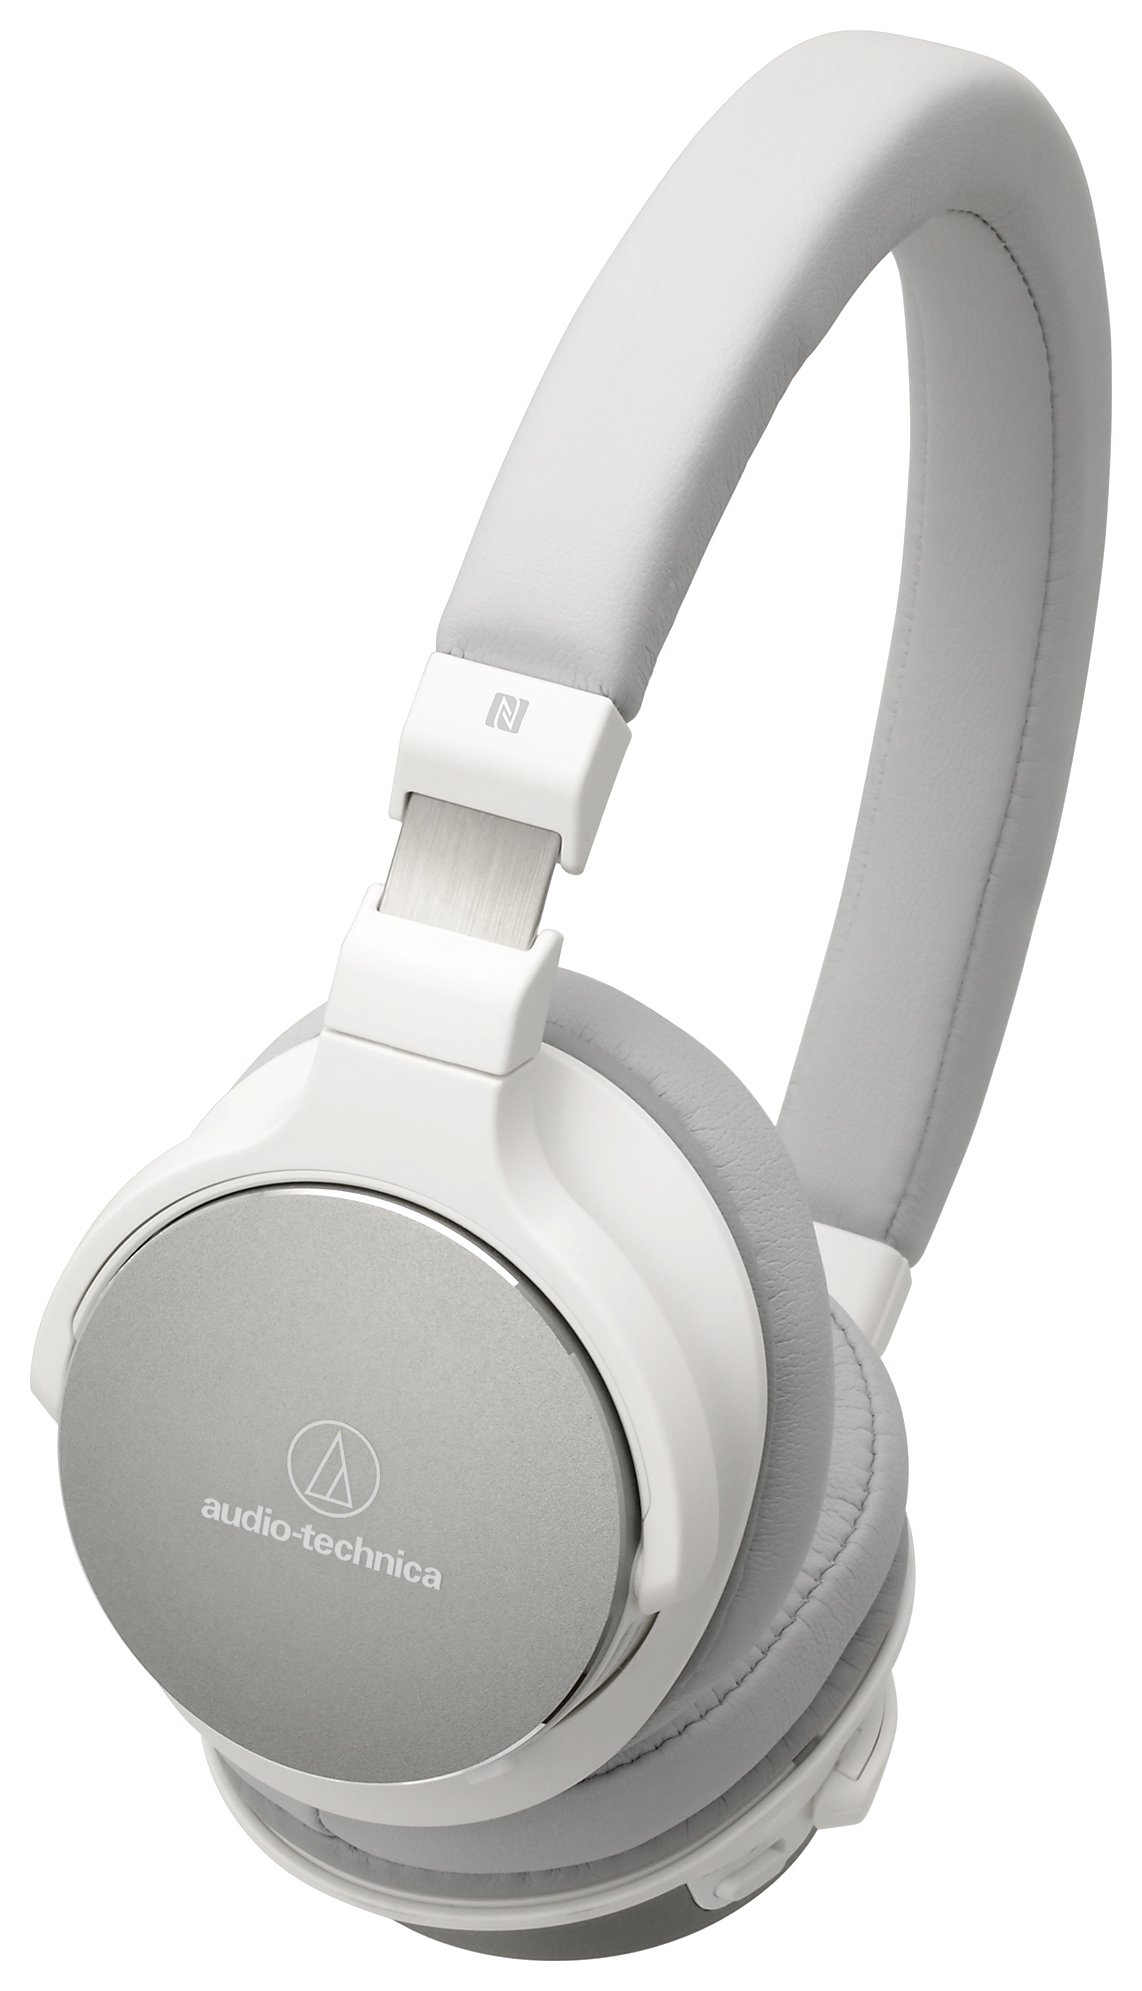 Audio Technica ATH-SR5 Wireless On-Ear Headphones - White